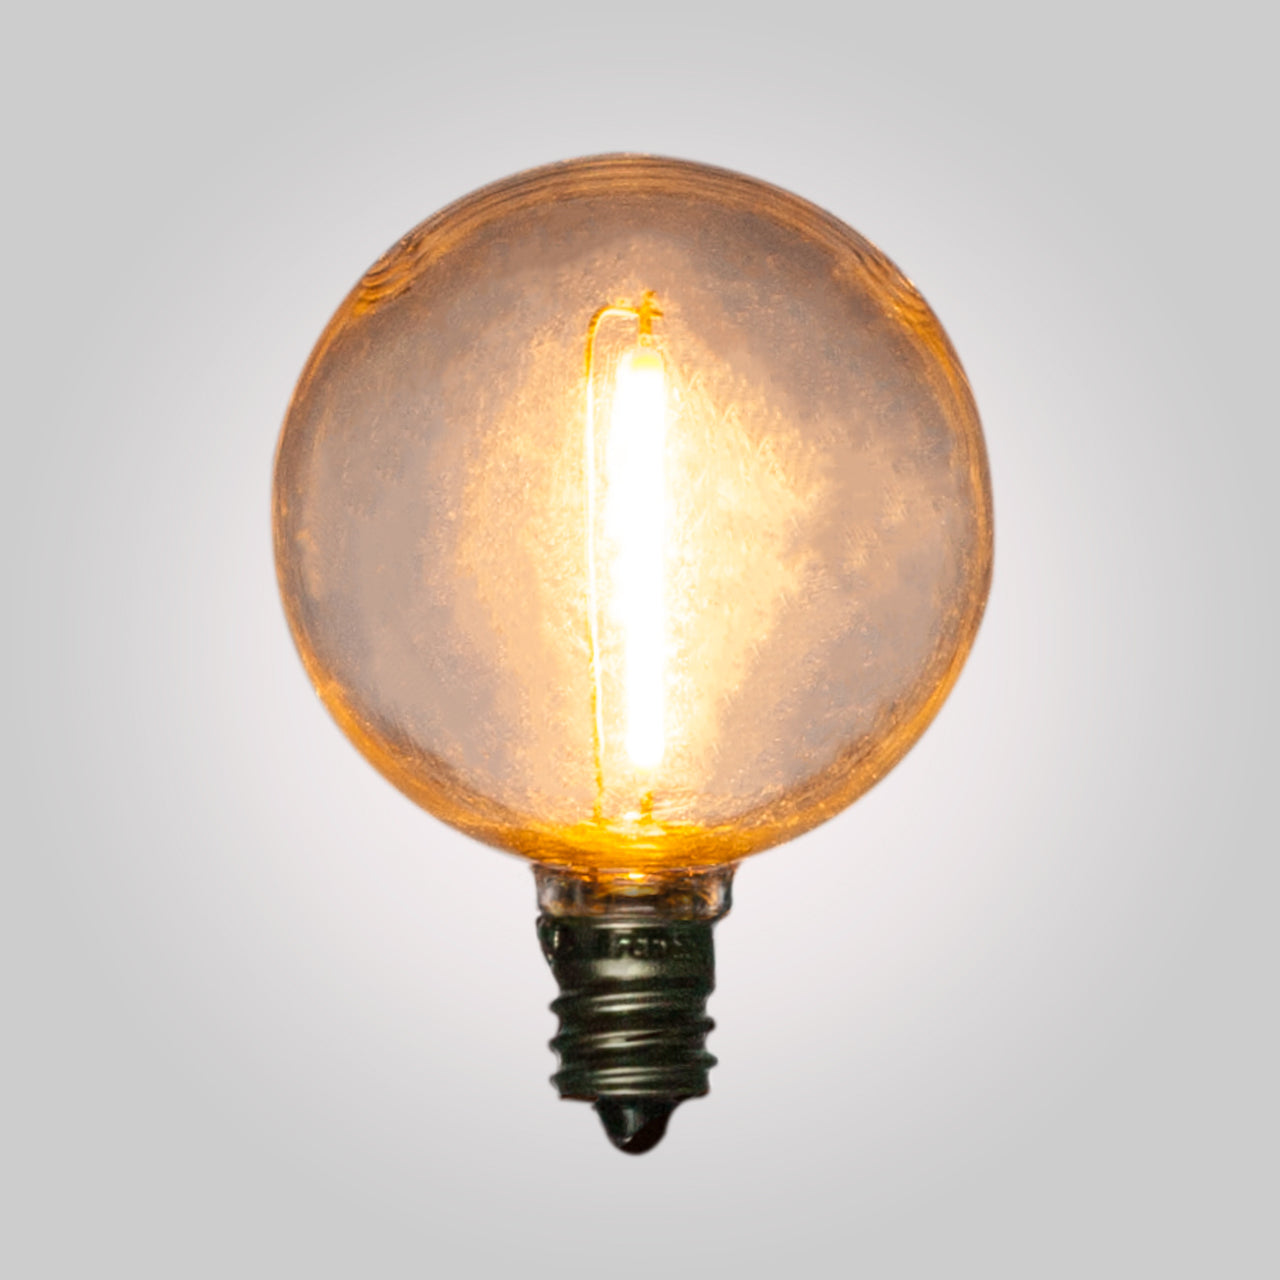 Benefits of LED Bulbs